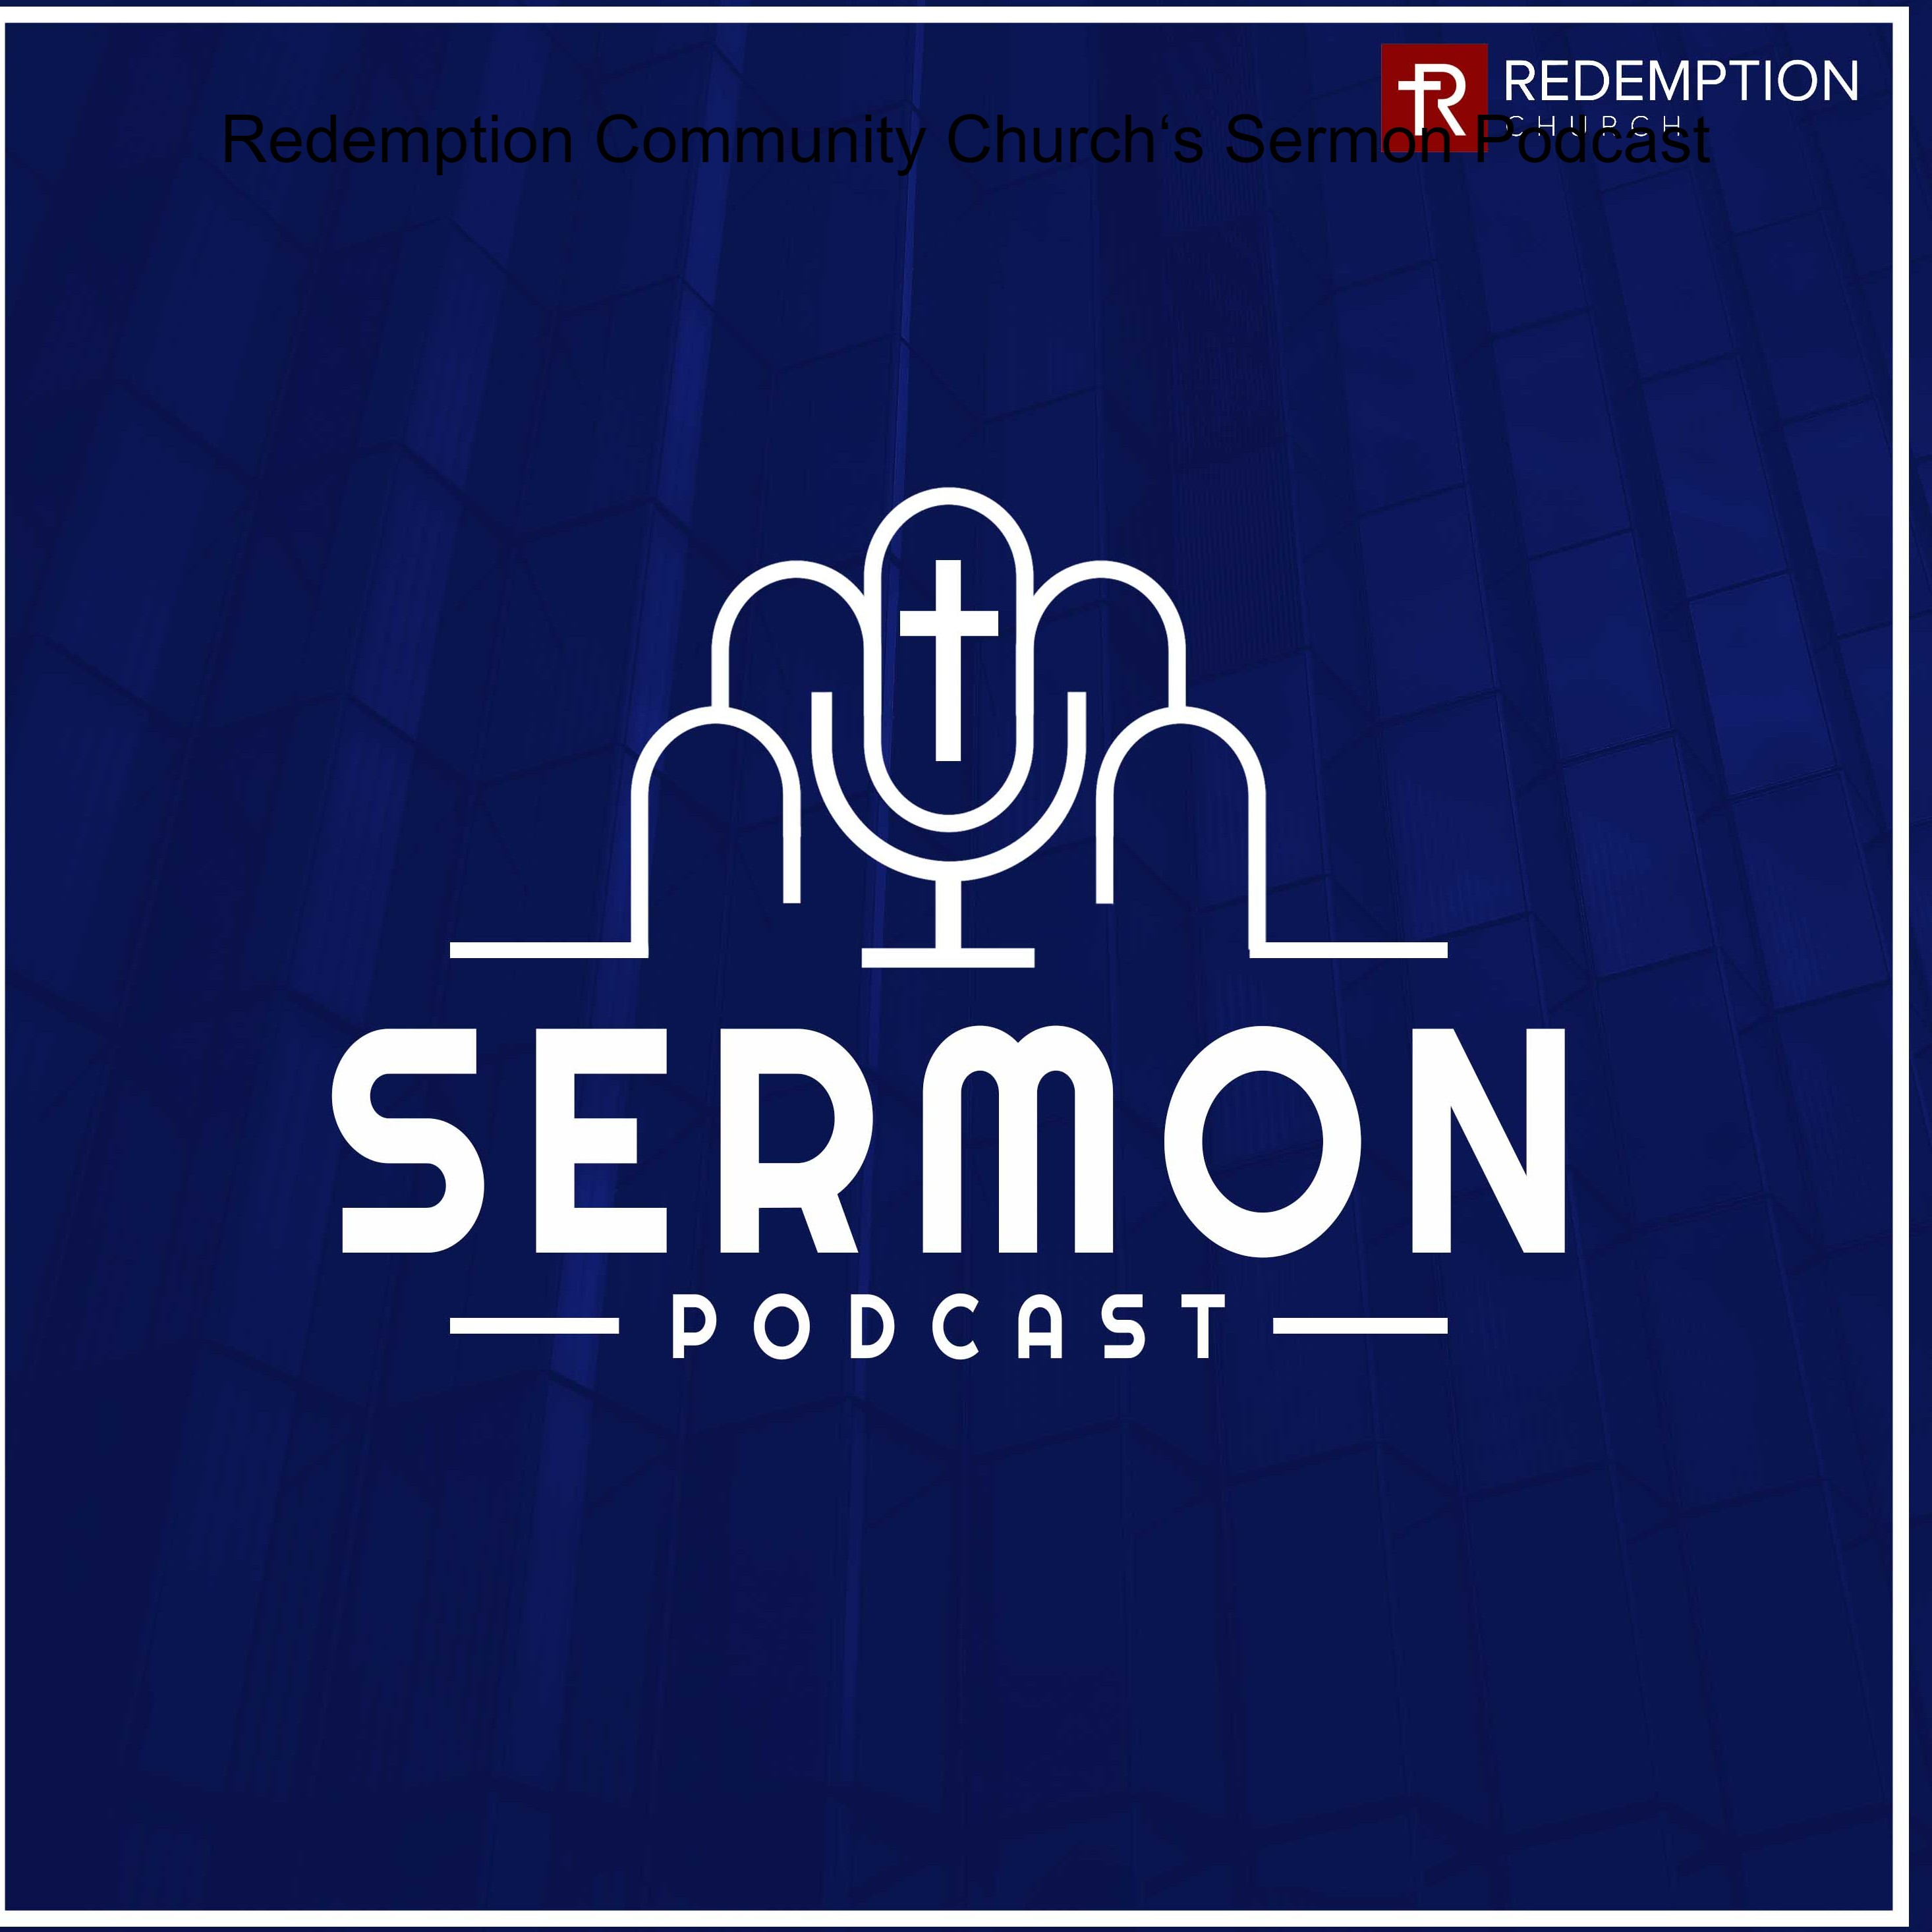 Redemption Community Church‘s Sermon Podcast